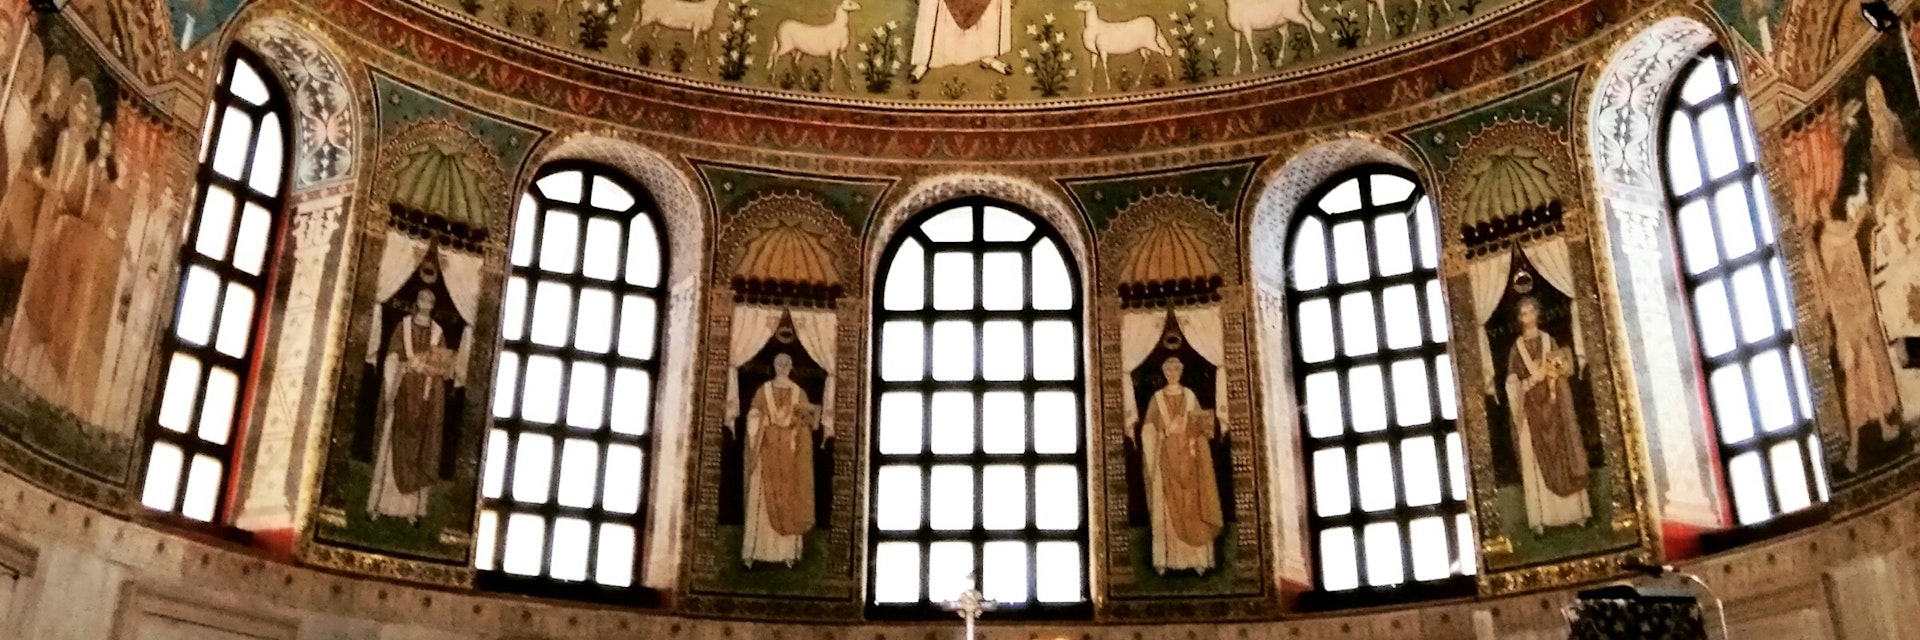 Interior Of Church